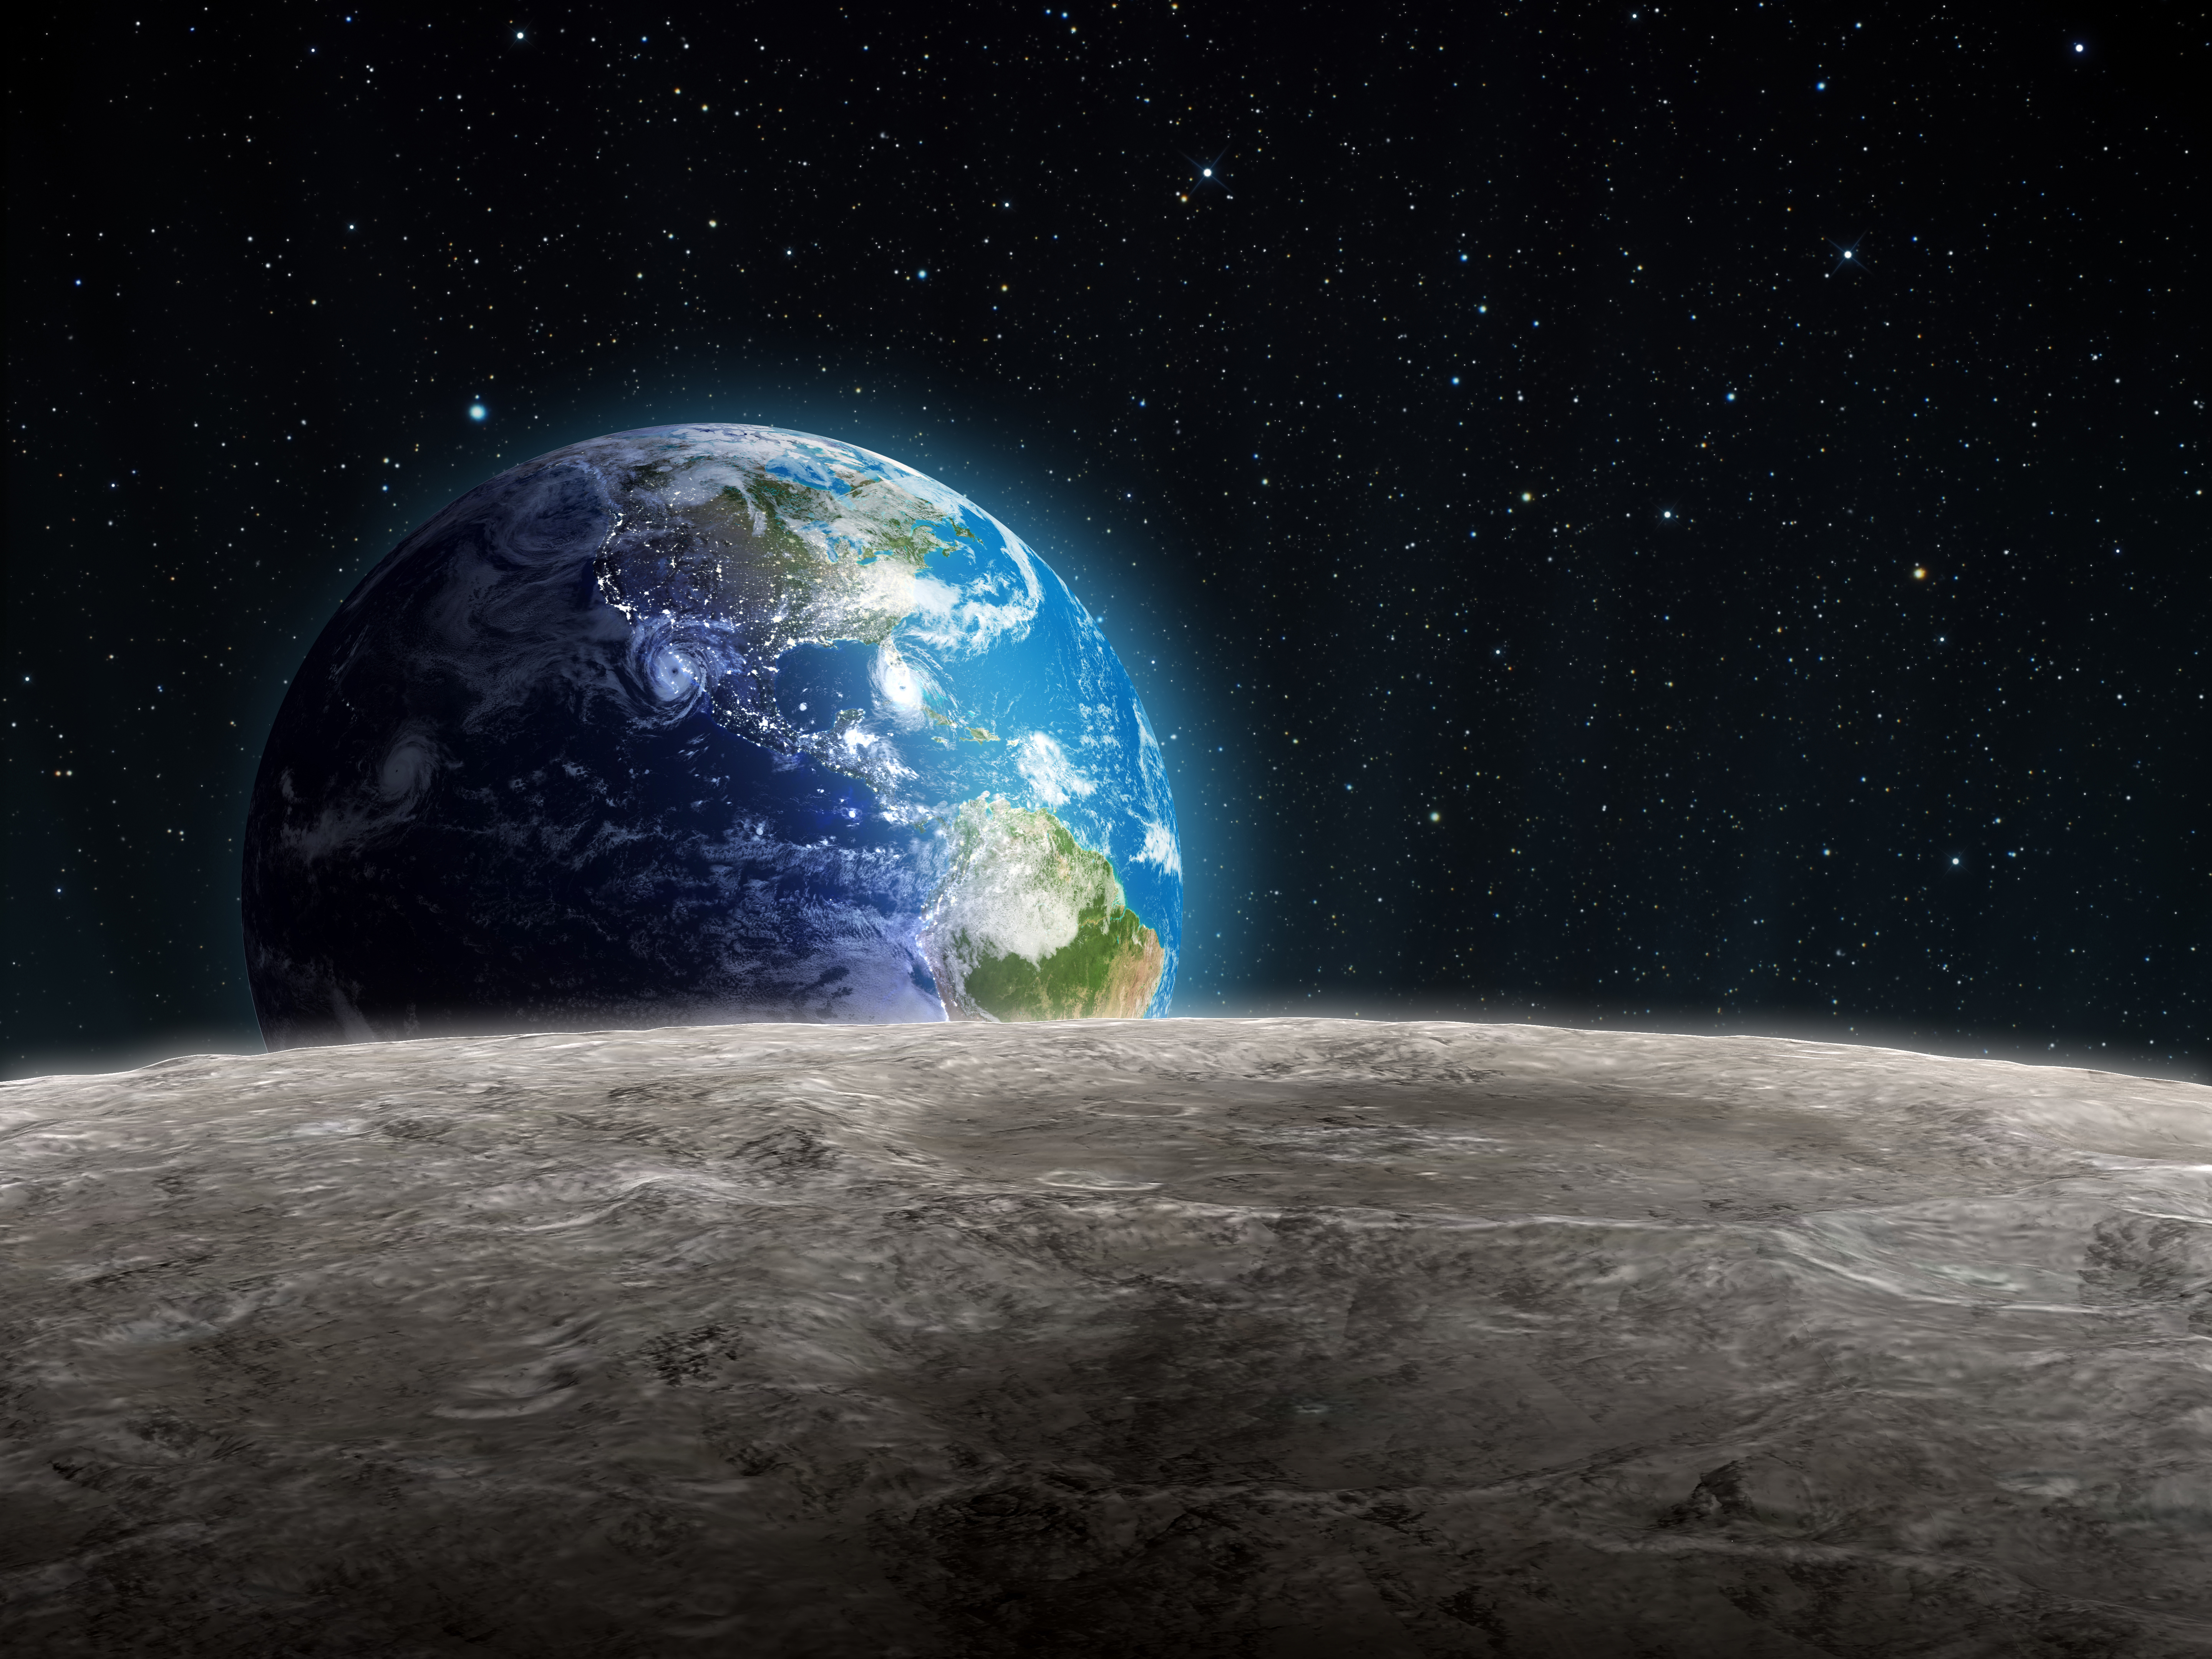 Earth seen from moon